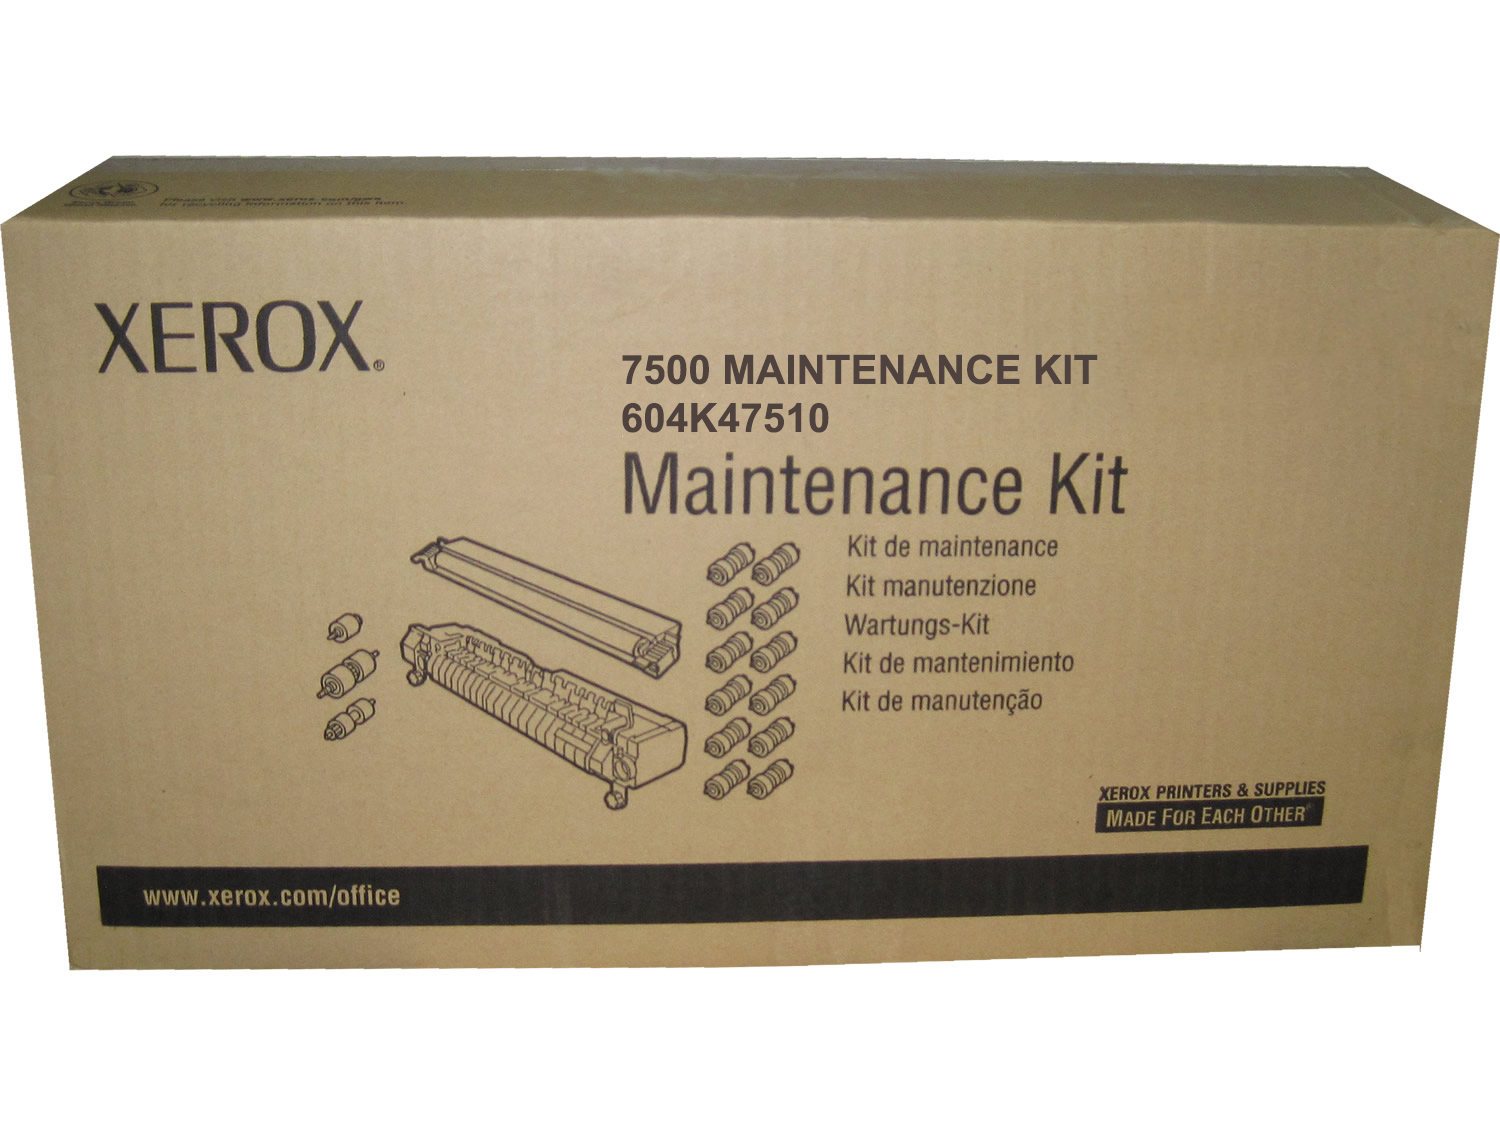 Original Xerox 604K47510 Maintenance Kit (604K47510)